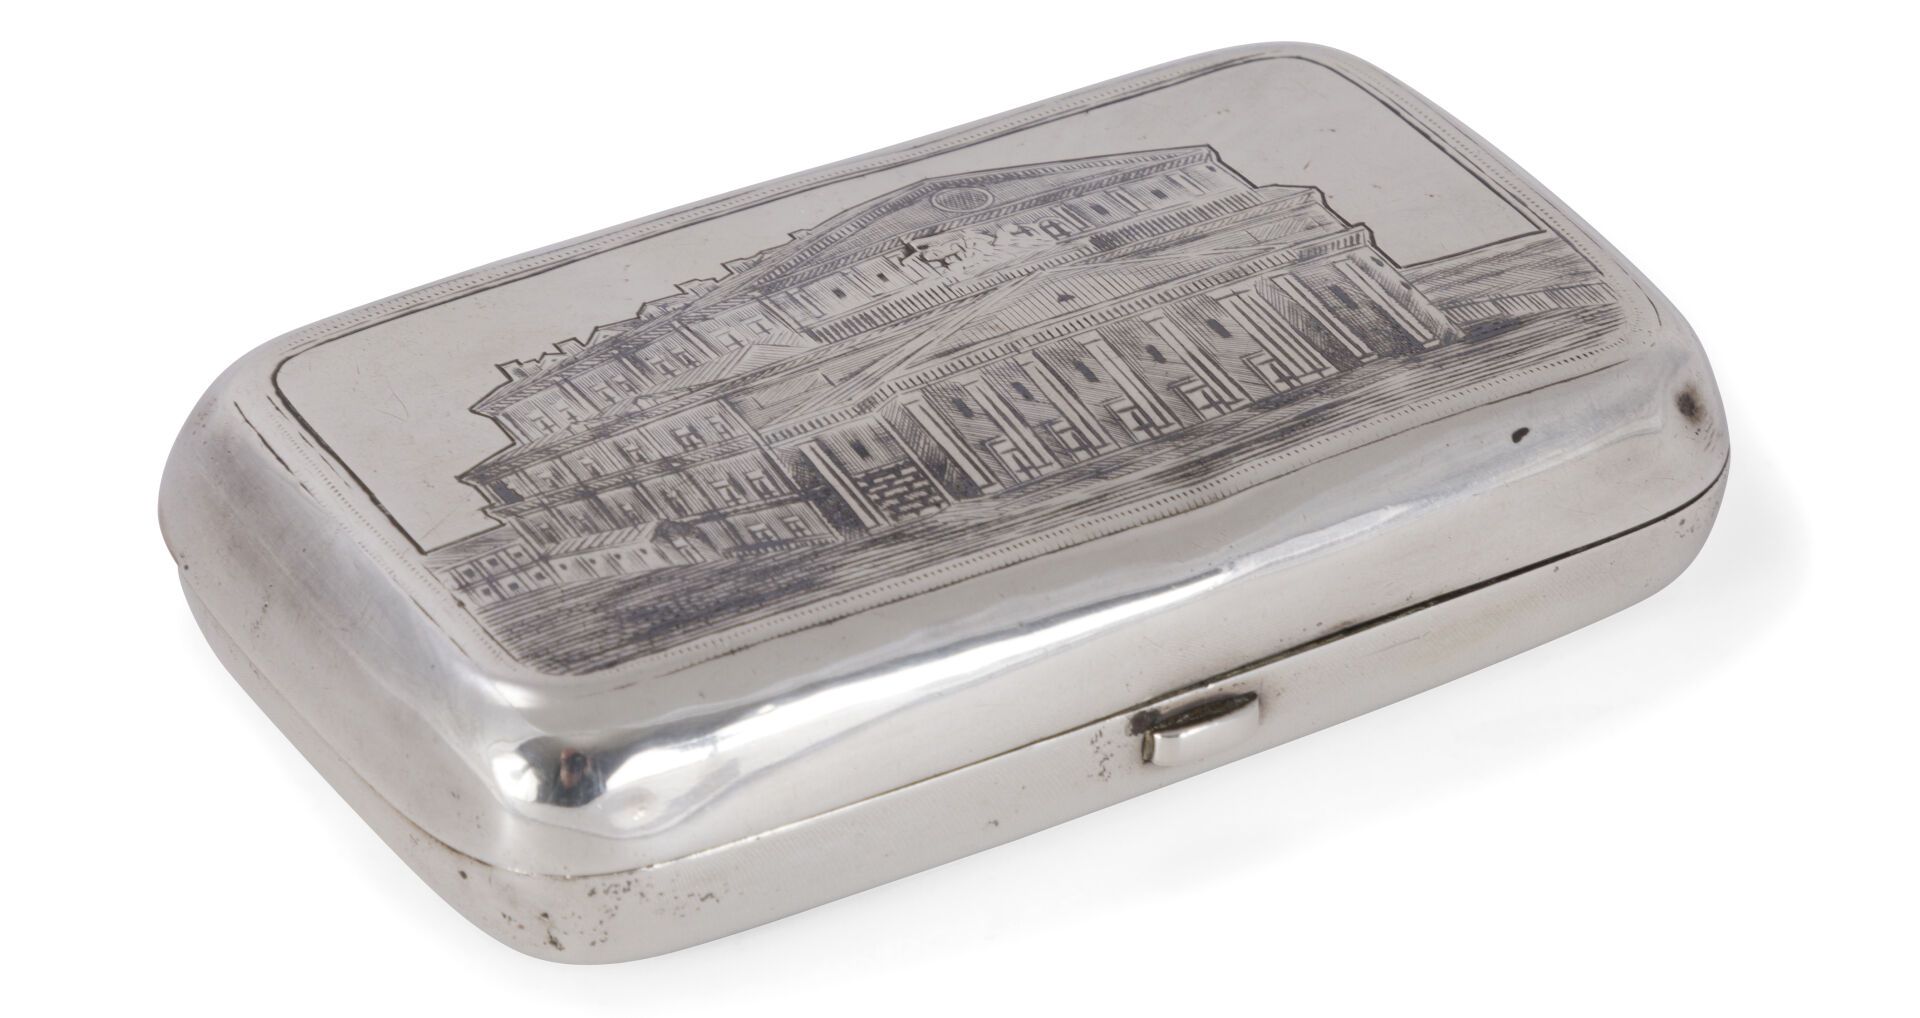 Null 雕刻的银和涅利洛香烟盒。莫斯科，1886年。
盖子上描绘了一个大型建筑。背面是一个尼洛银格子，上面有一个未雕刻的圆形图章。
印记：84，莫斯科1886&hellip;